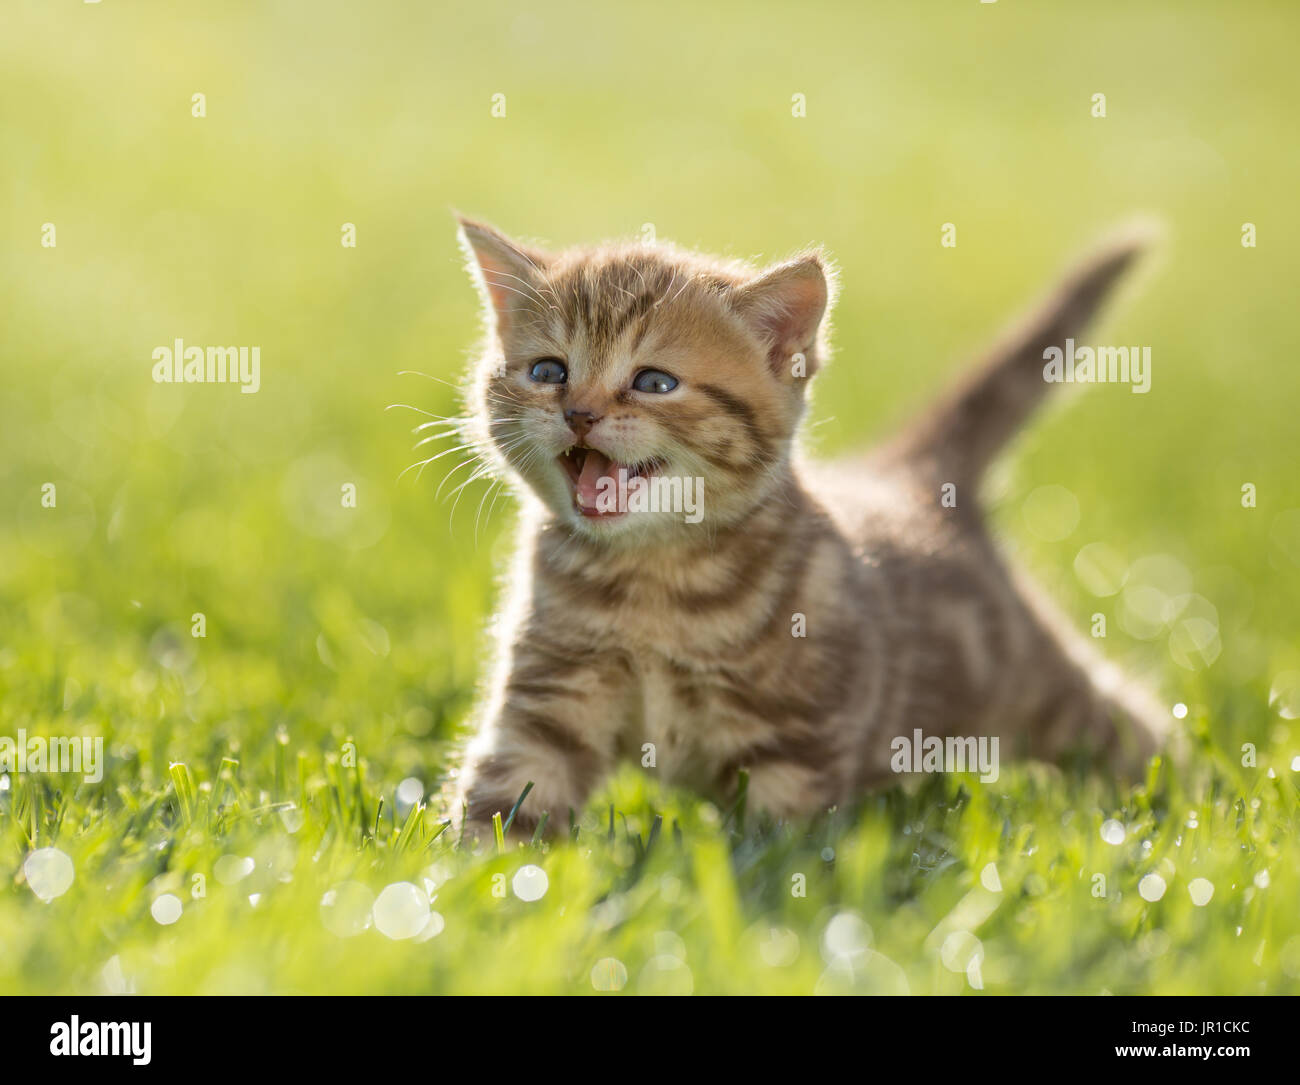 Junge Kätzchen-Katze miaut in dem grünen Rasen Stockfoto